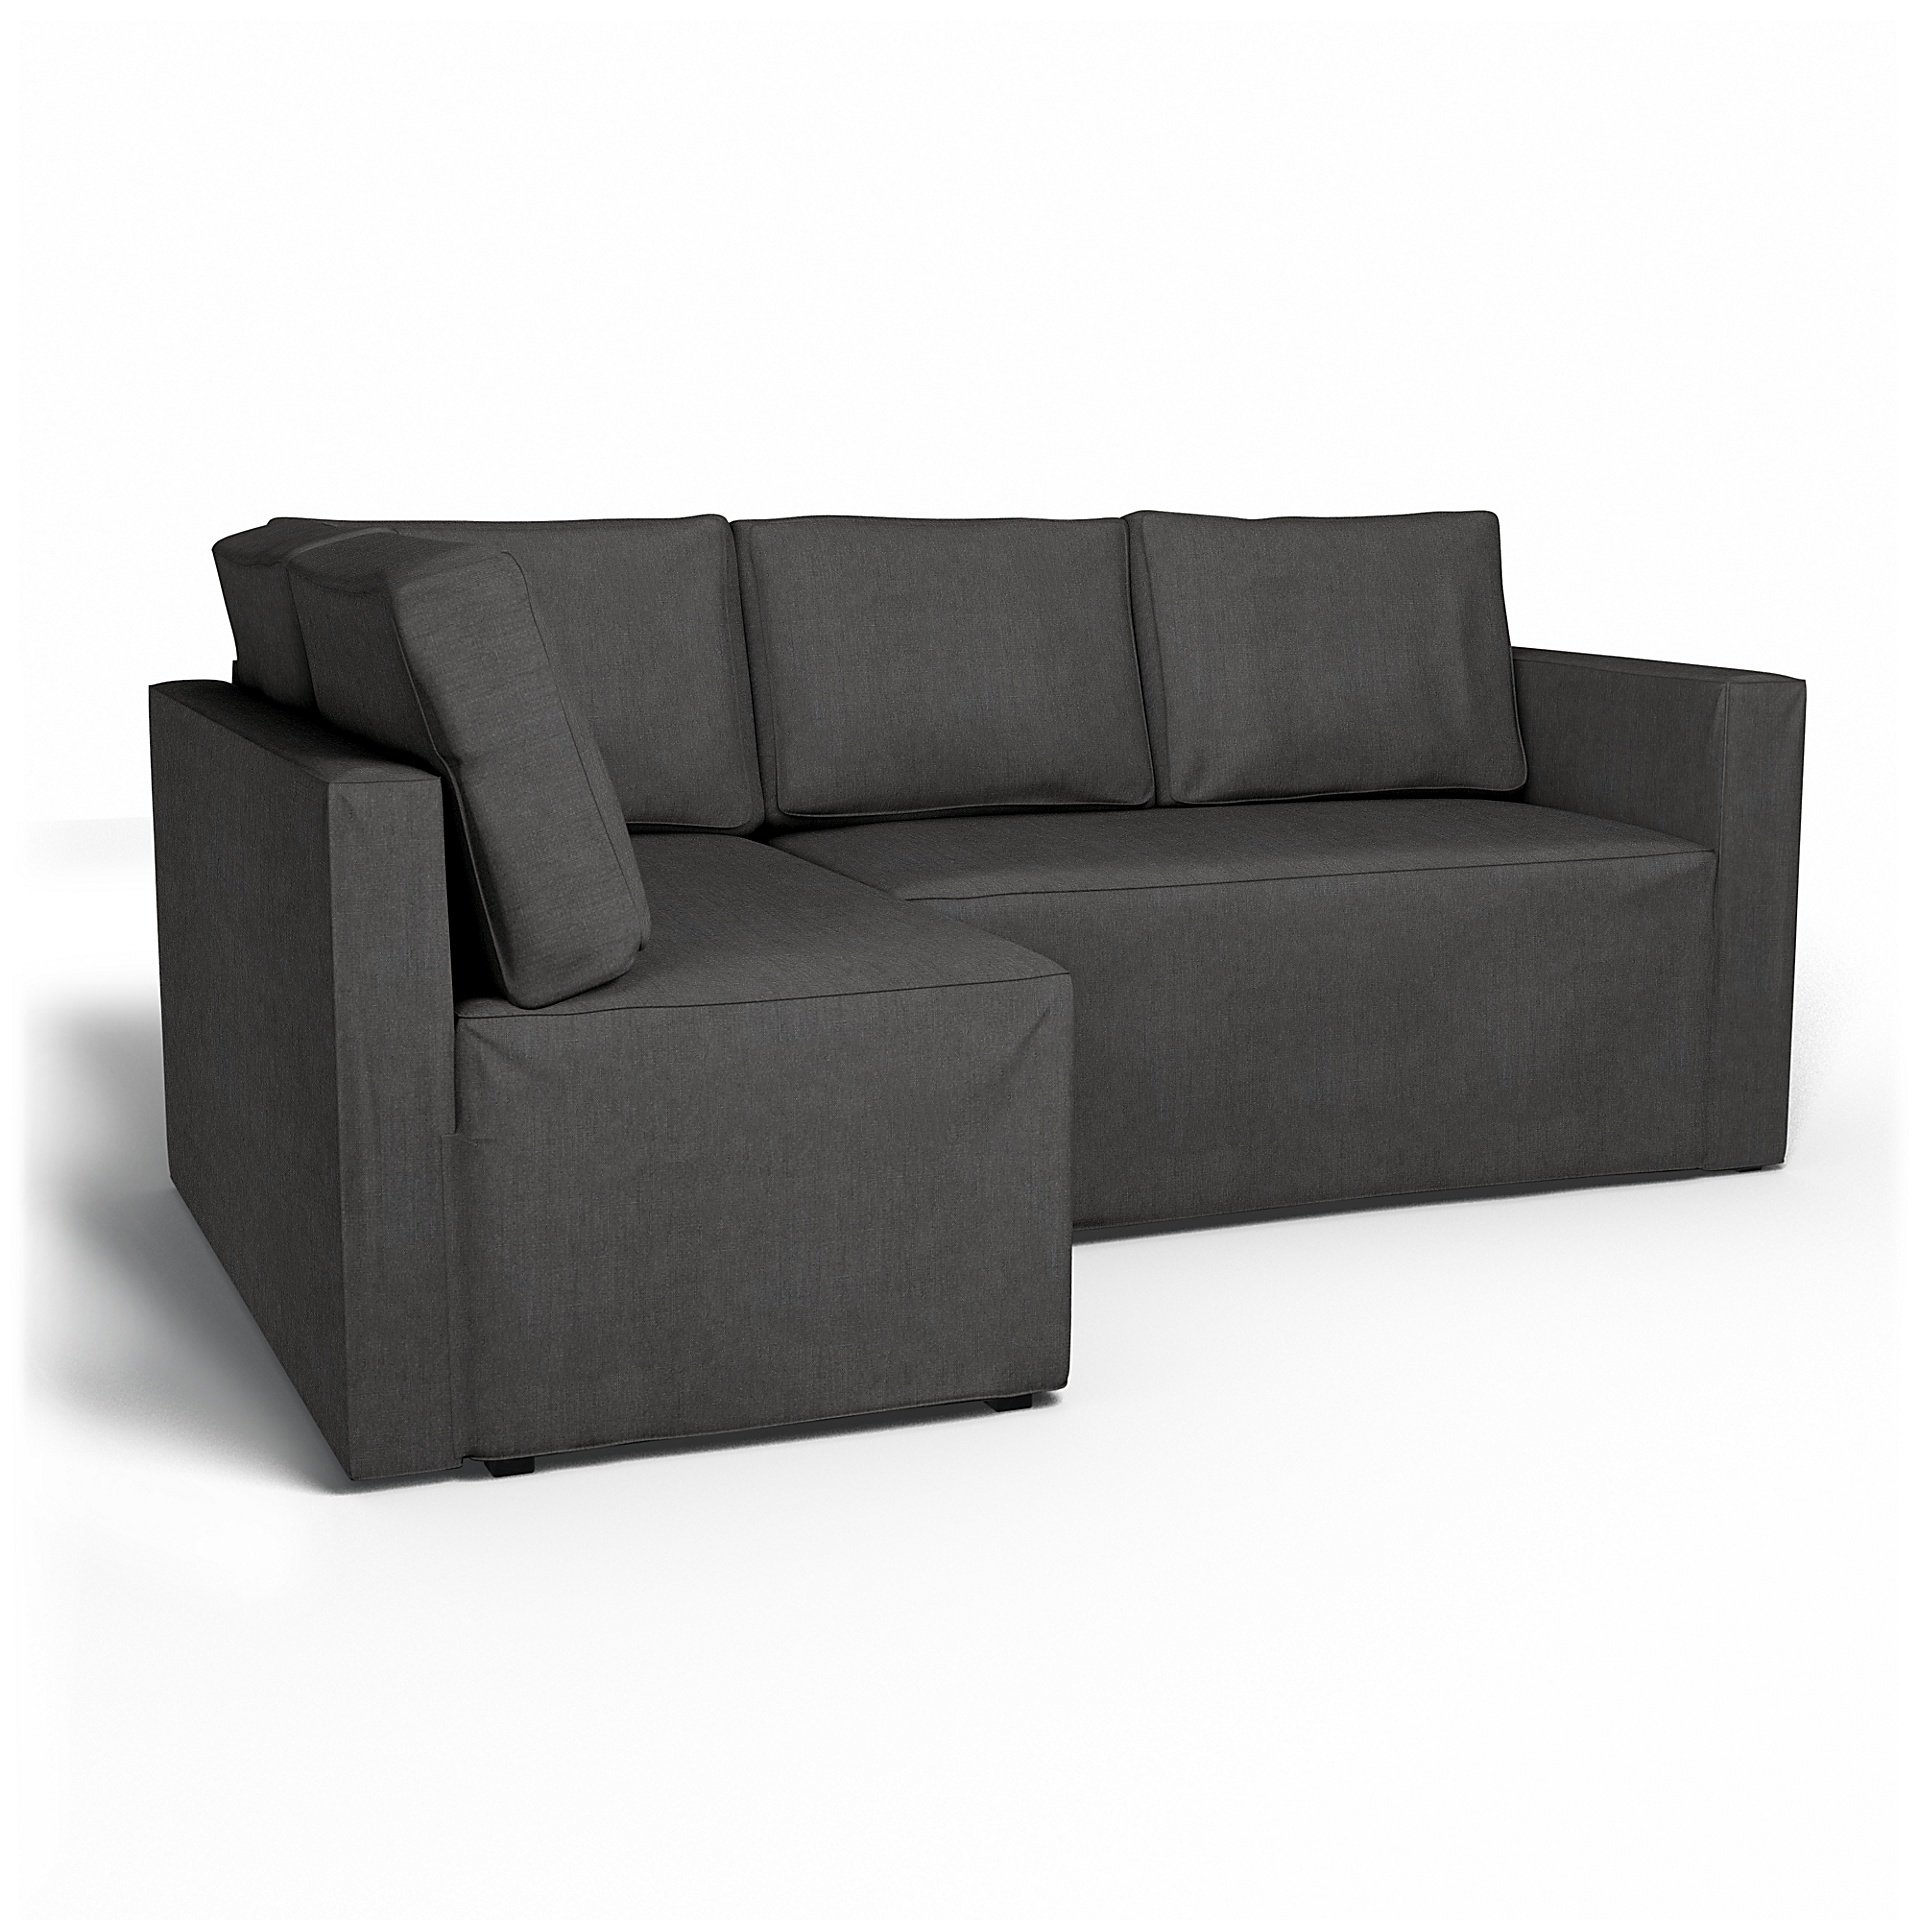 IKEA - Fagelbo Sofa Bed with Left Chaise Cover, Espresso, Linen - Bemz